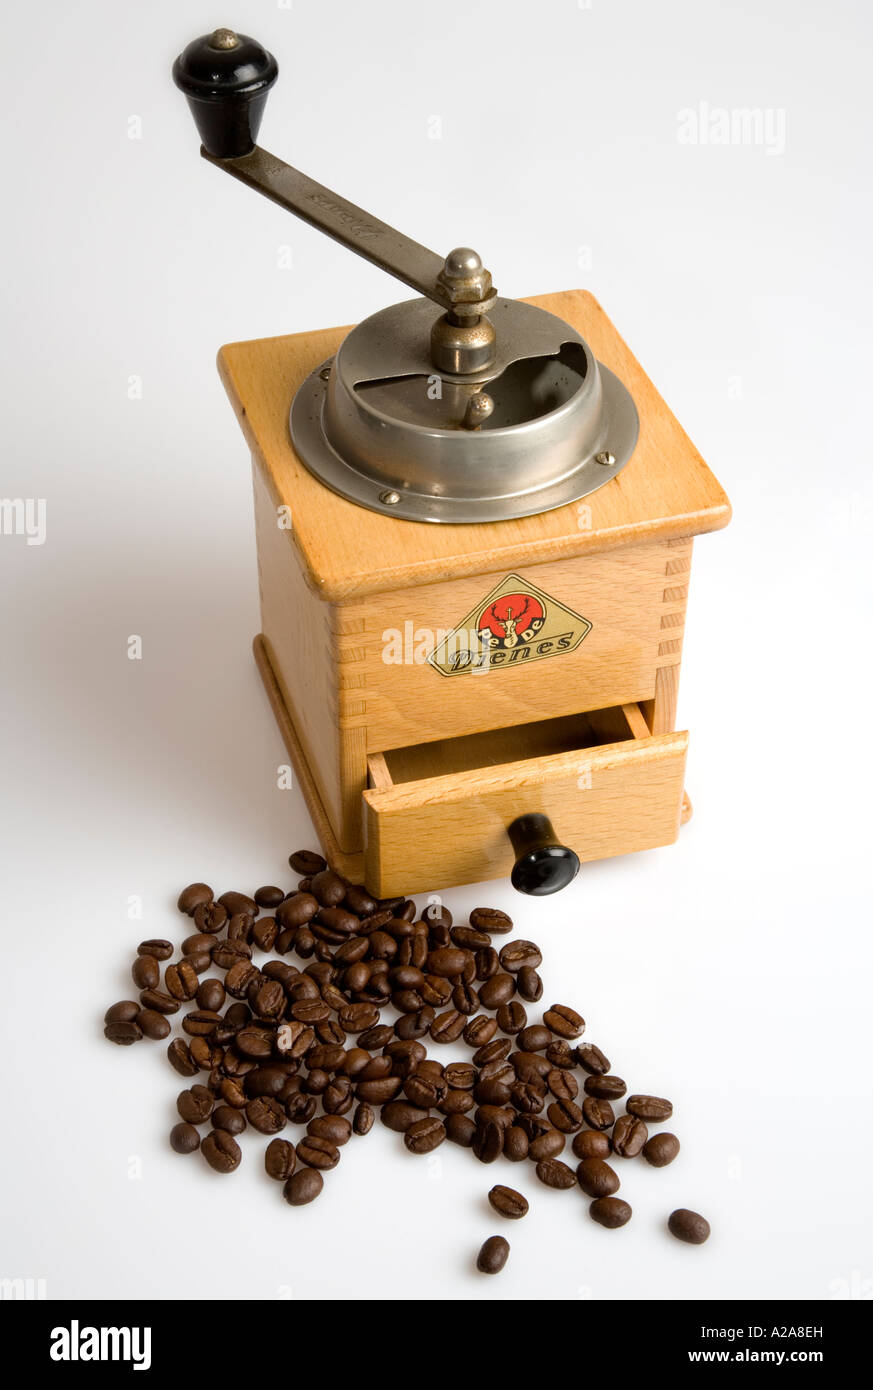 https://c8.alamy.com/comp/A2A8EH/vintage-german-coffee-grinder-A2A8EH.jpg